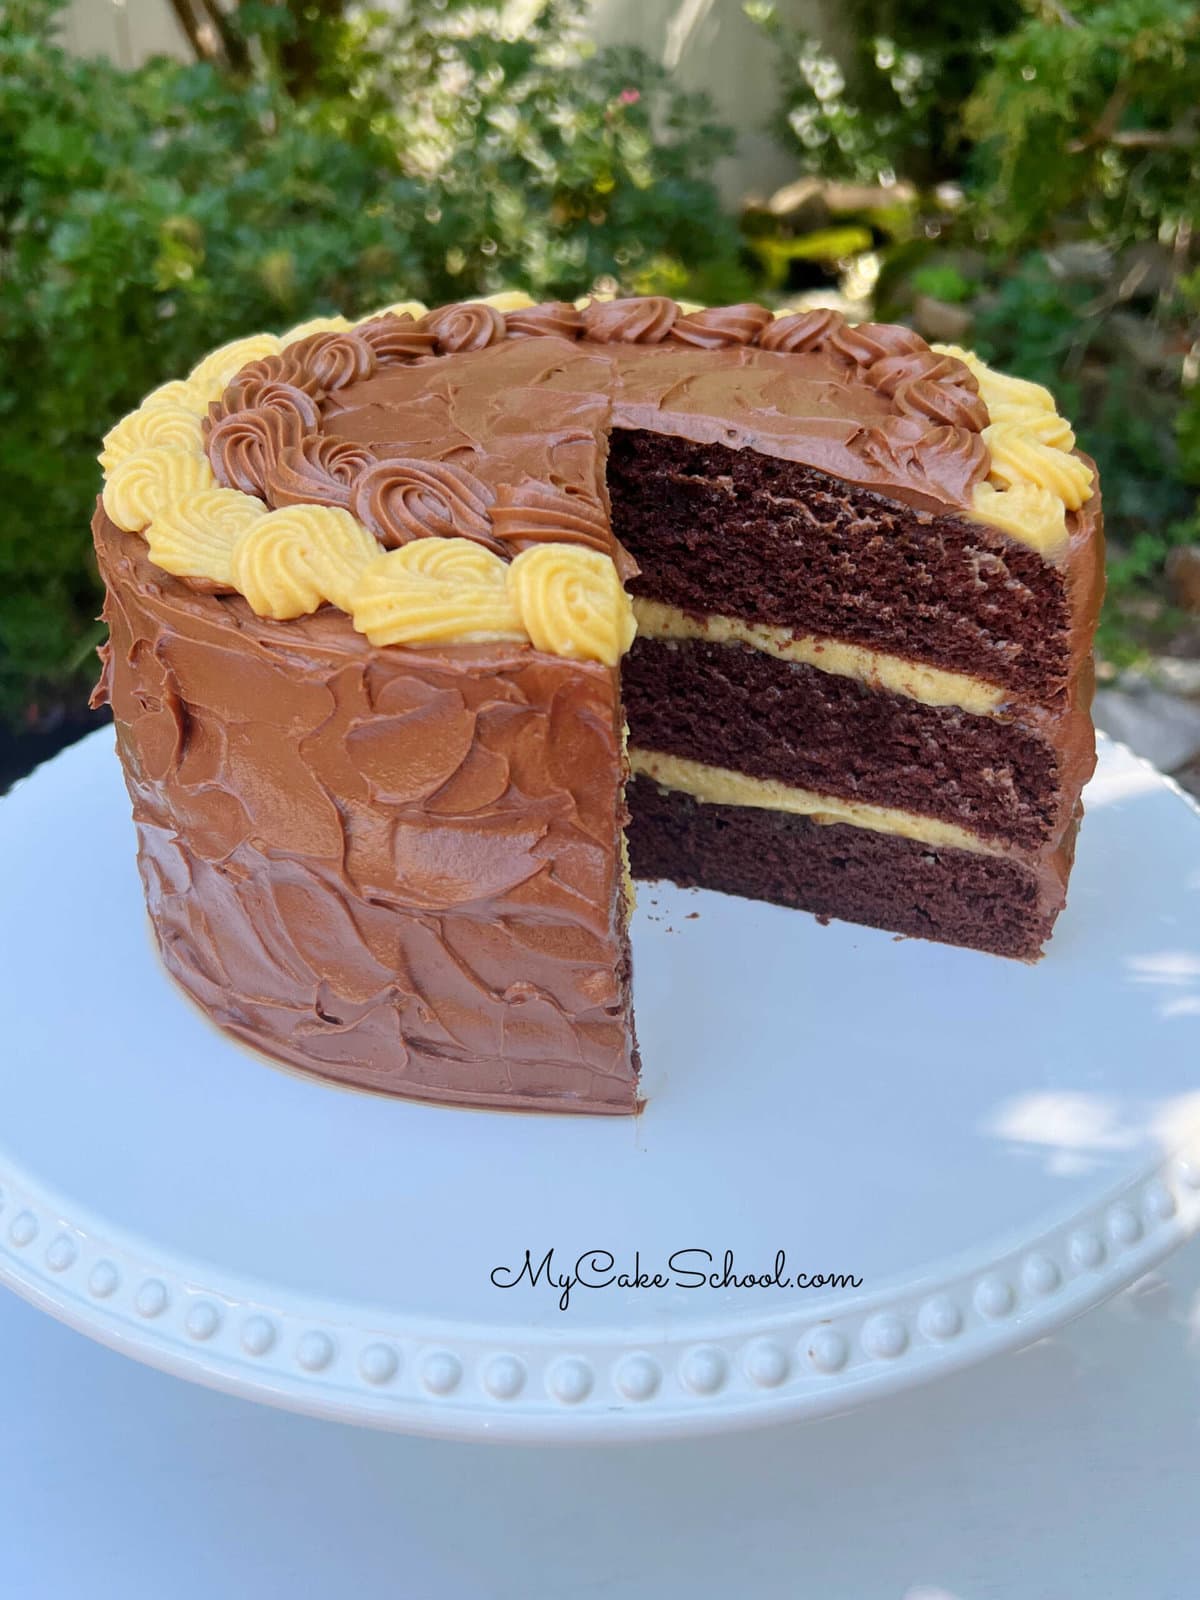 Chocolate Caramel Cake, sliced, on a cake pedestal.